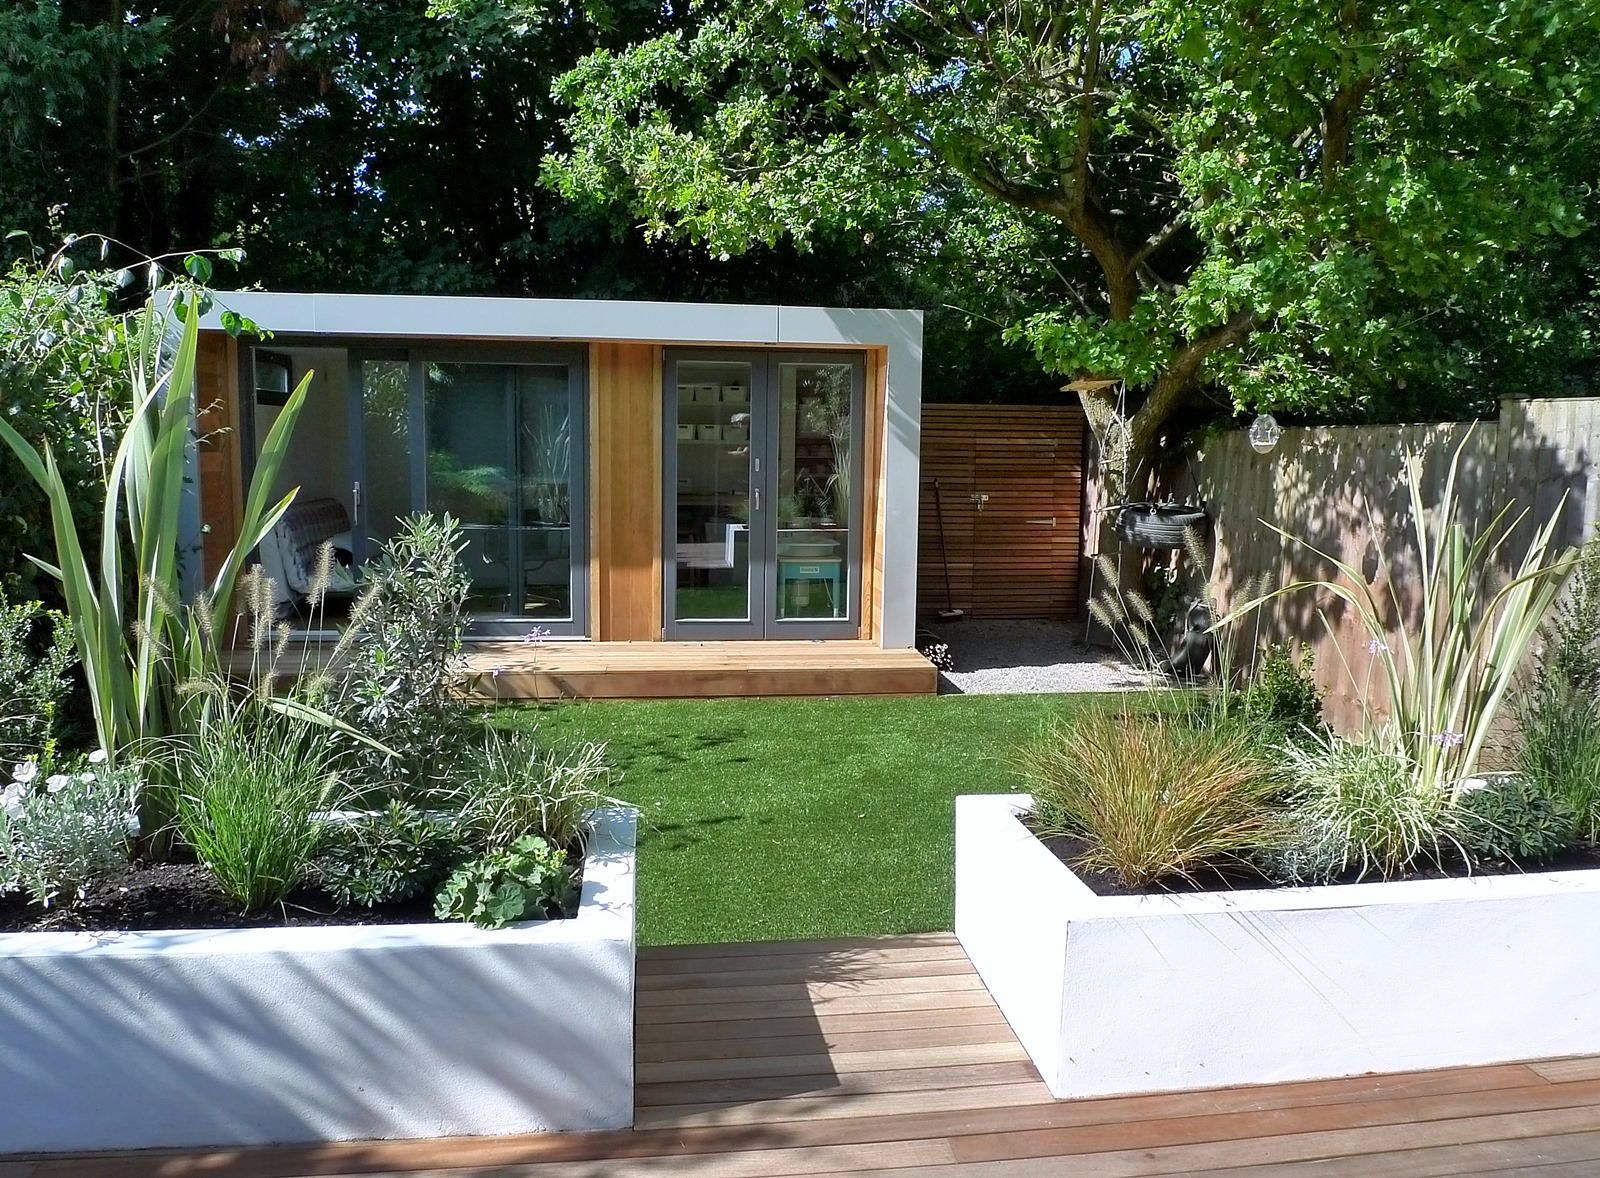 clapham and balham modern garden design decking planting artificial lawn grass hardwood privacy screen indoor outdoor space (10)